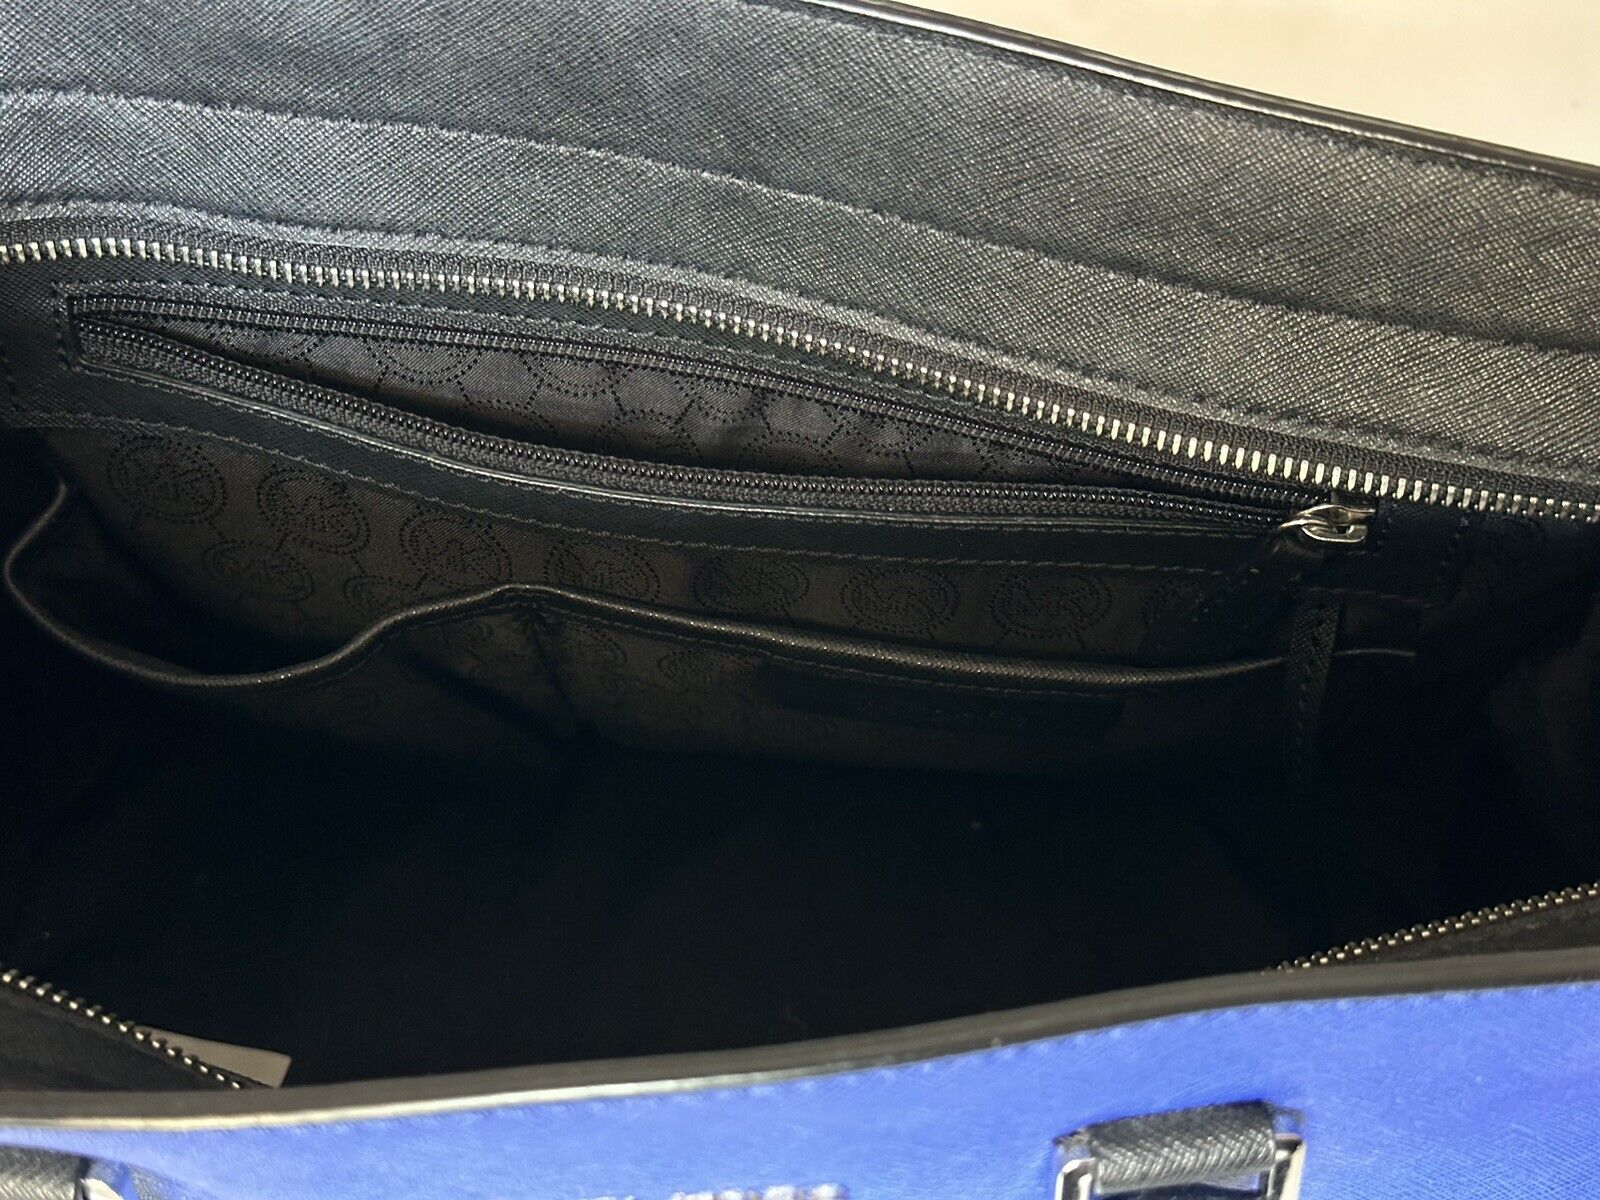 Michael Kors  Selma Sapphire/Black LG  Leather Satchel Handbag